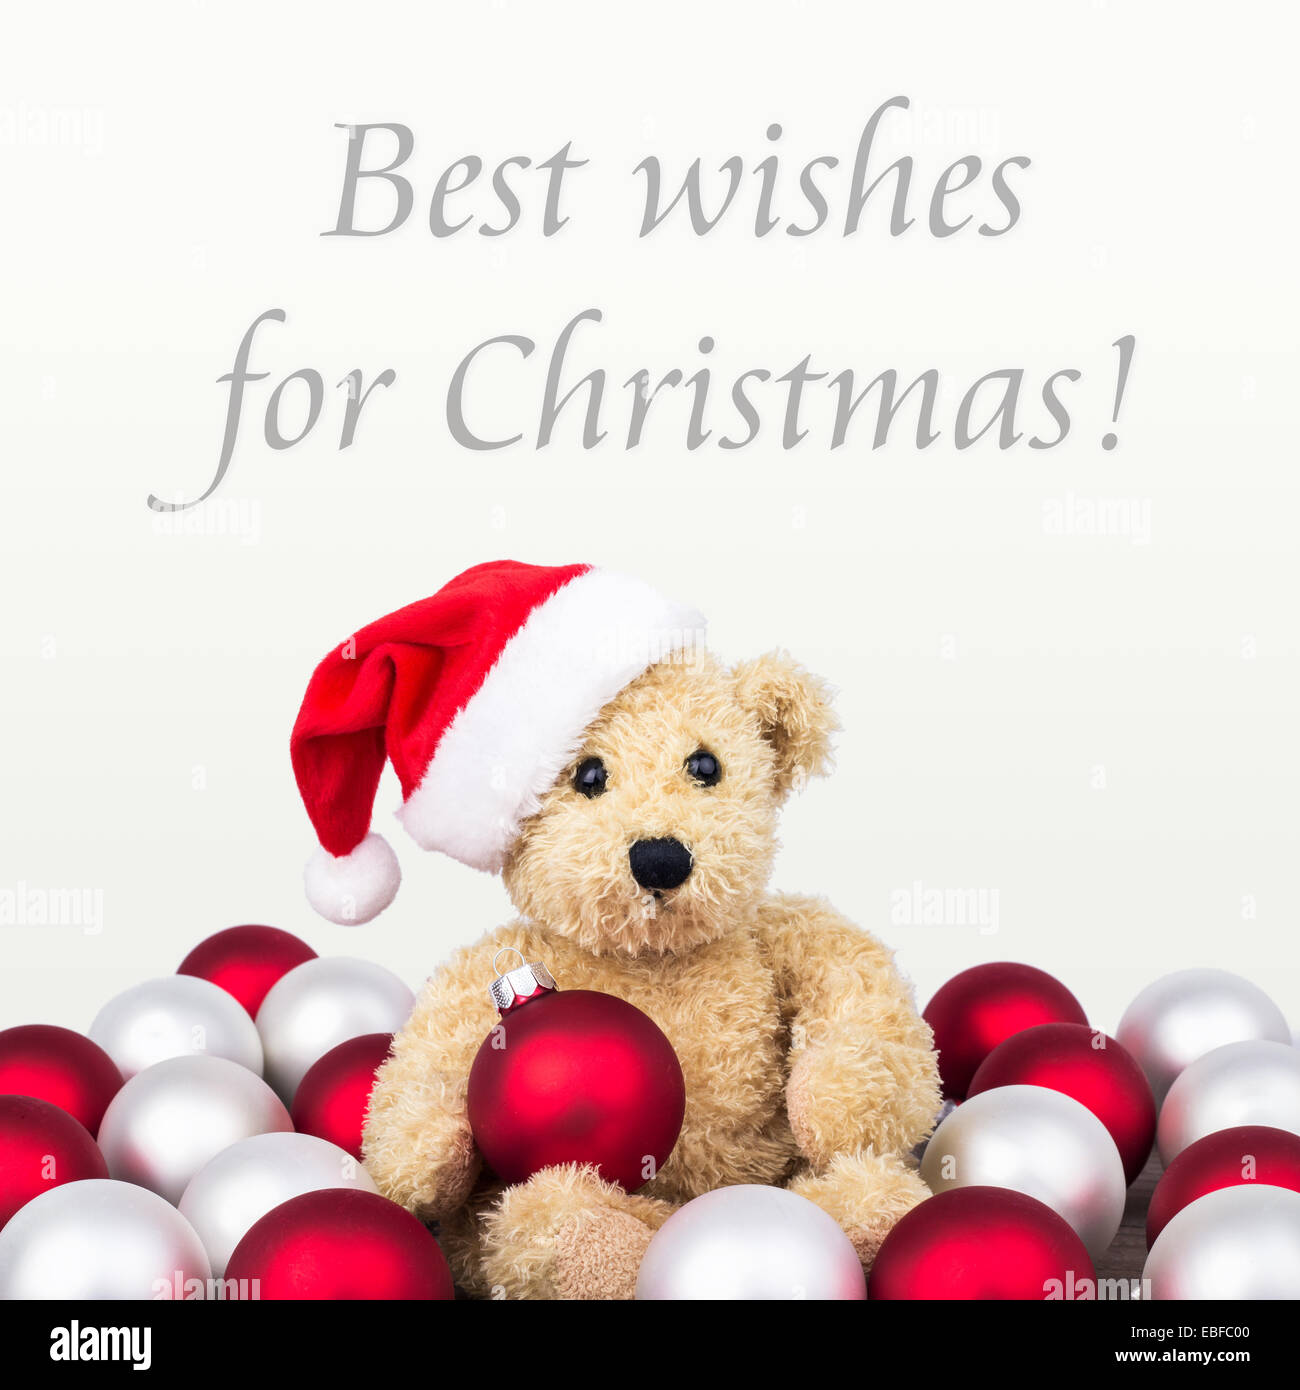 english Christmas card with teddy bear Stock Photo